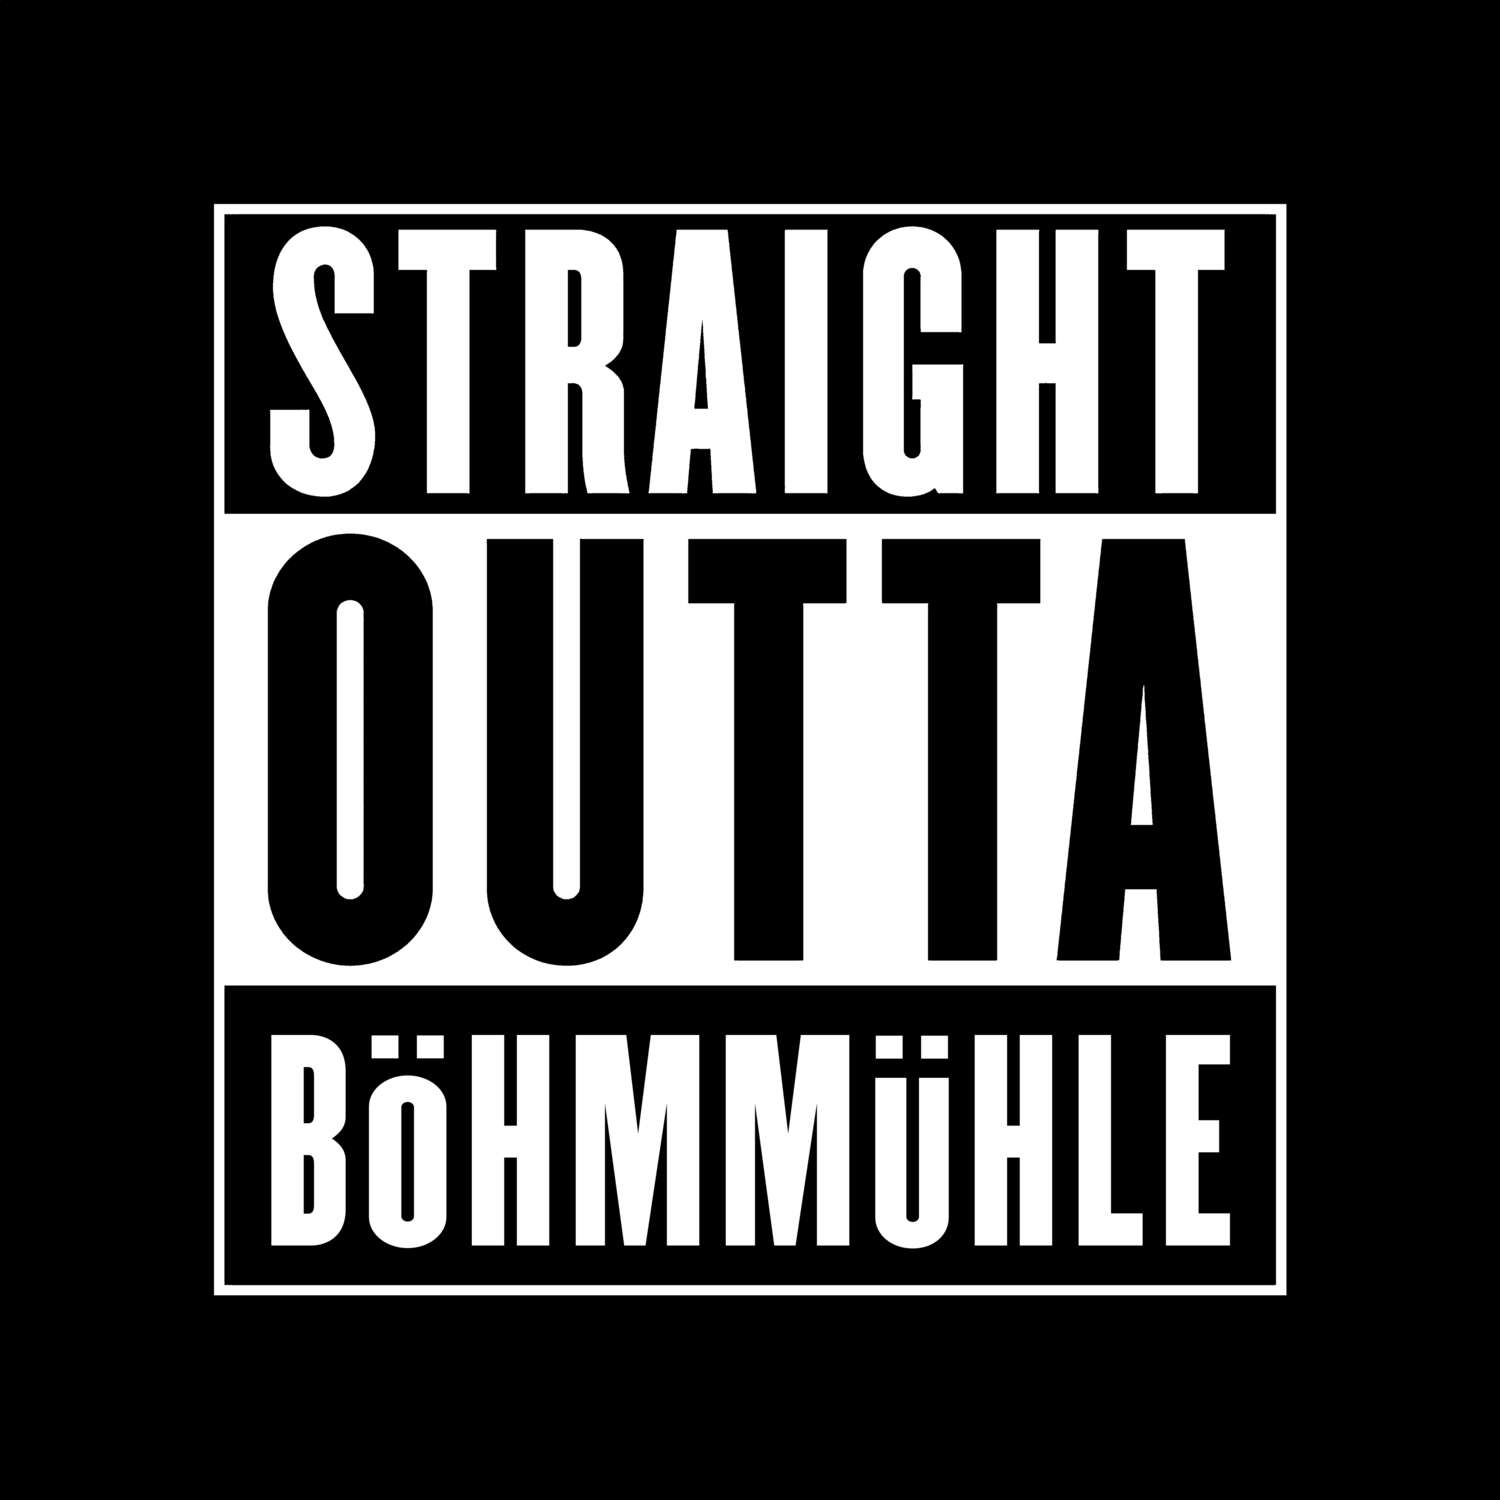 Böhmmühle T-Shirt »Straight Outta«